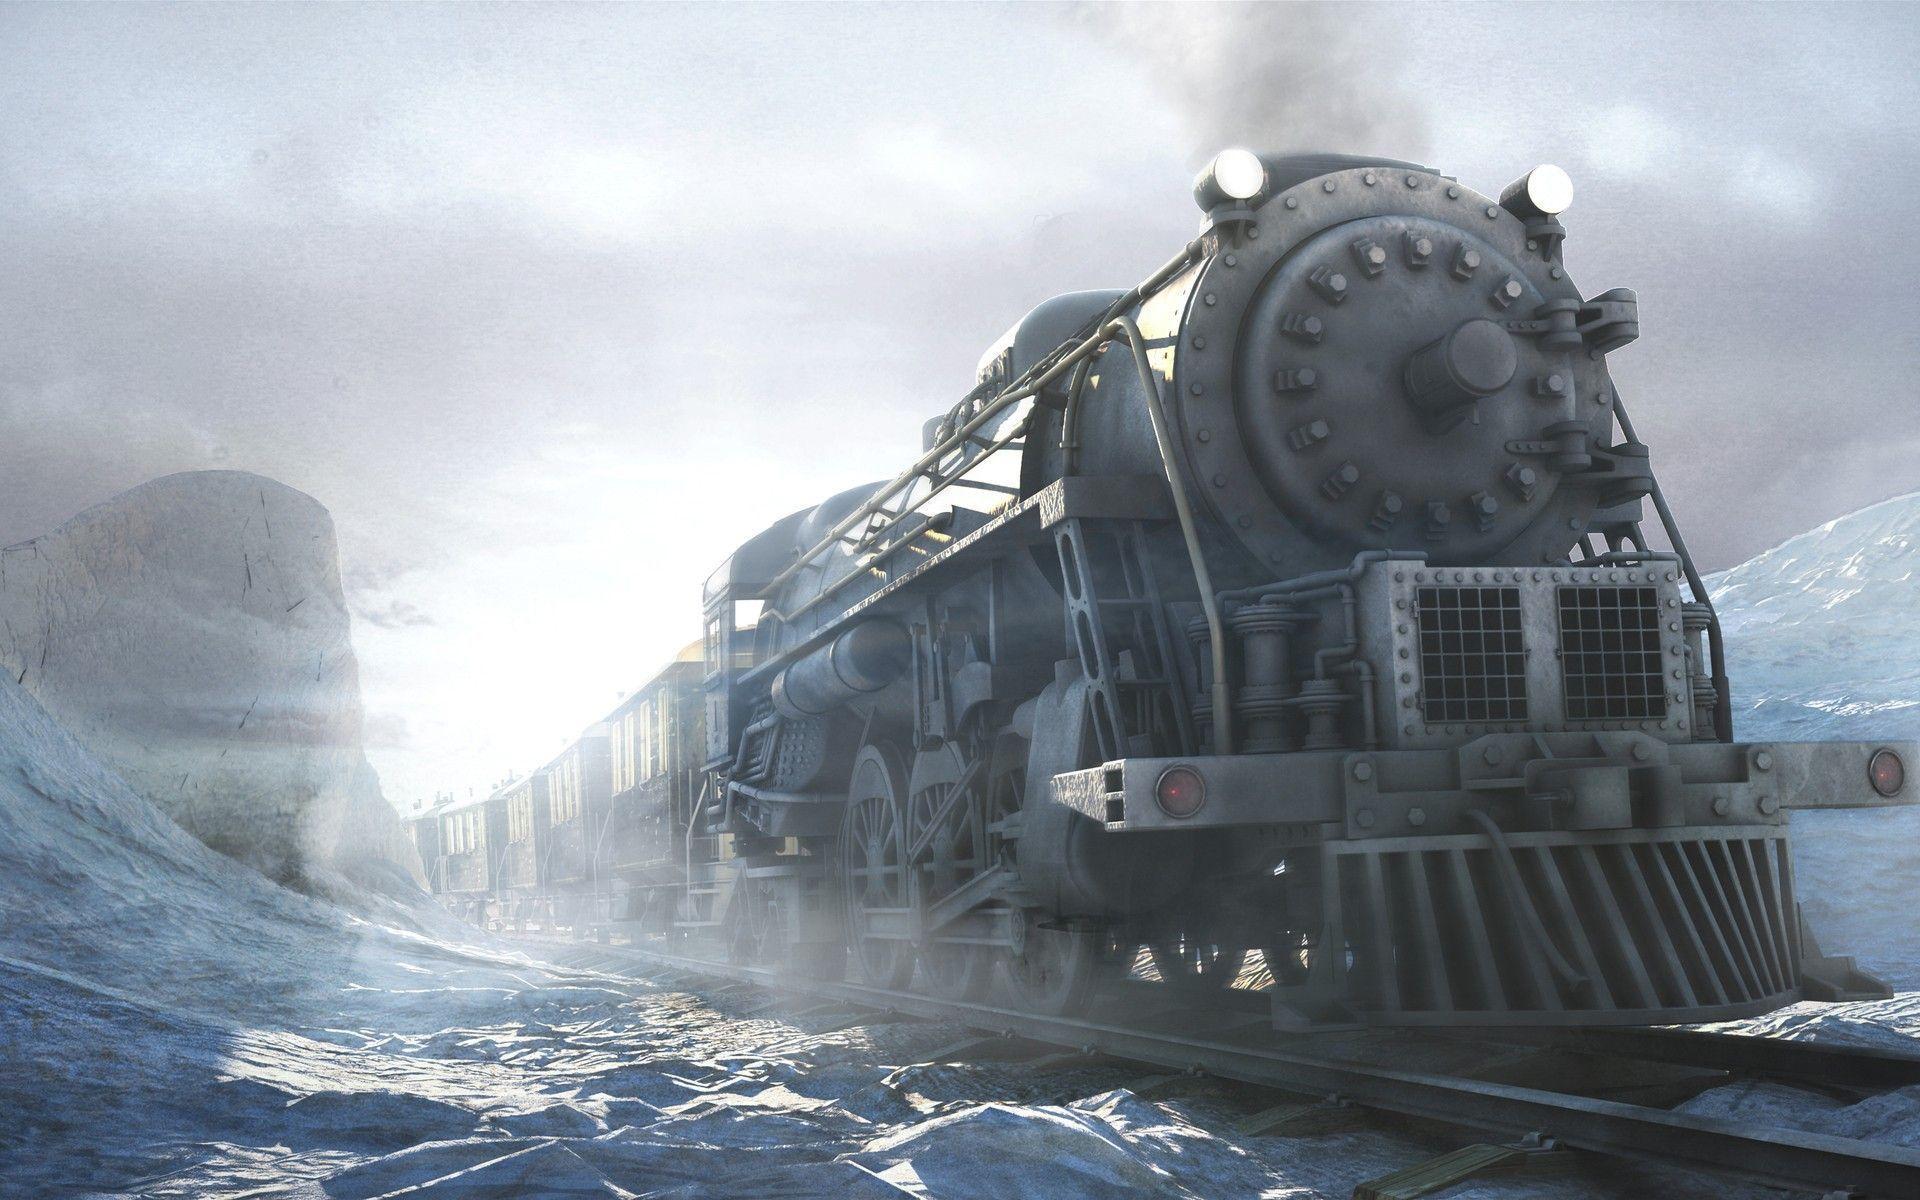 Steam Train Wallpaper Desktop